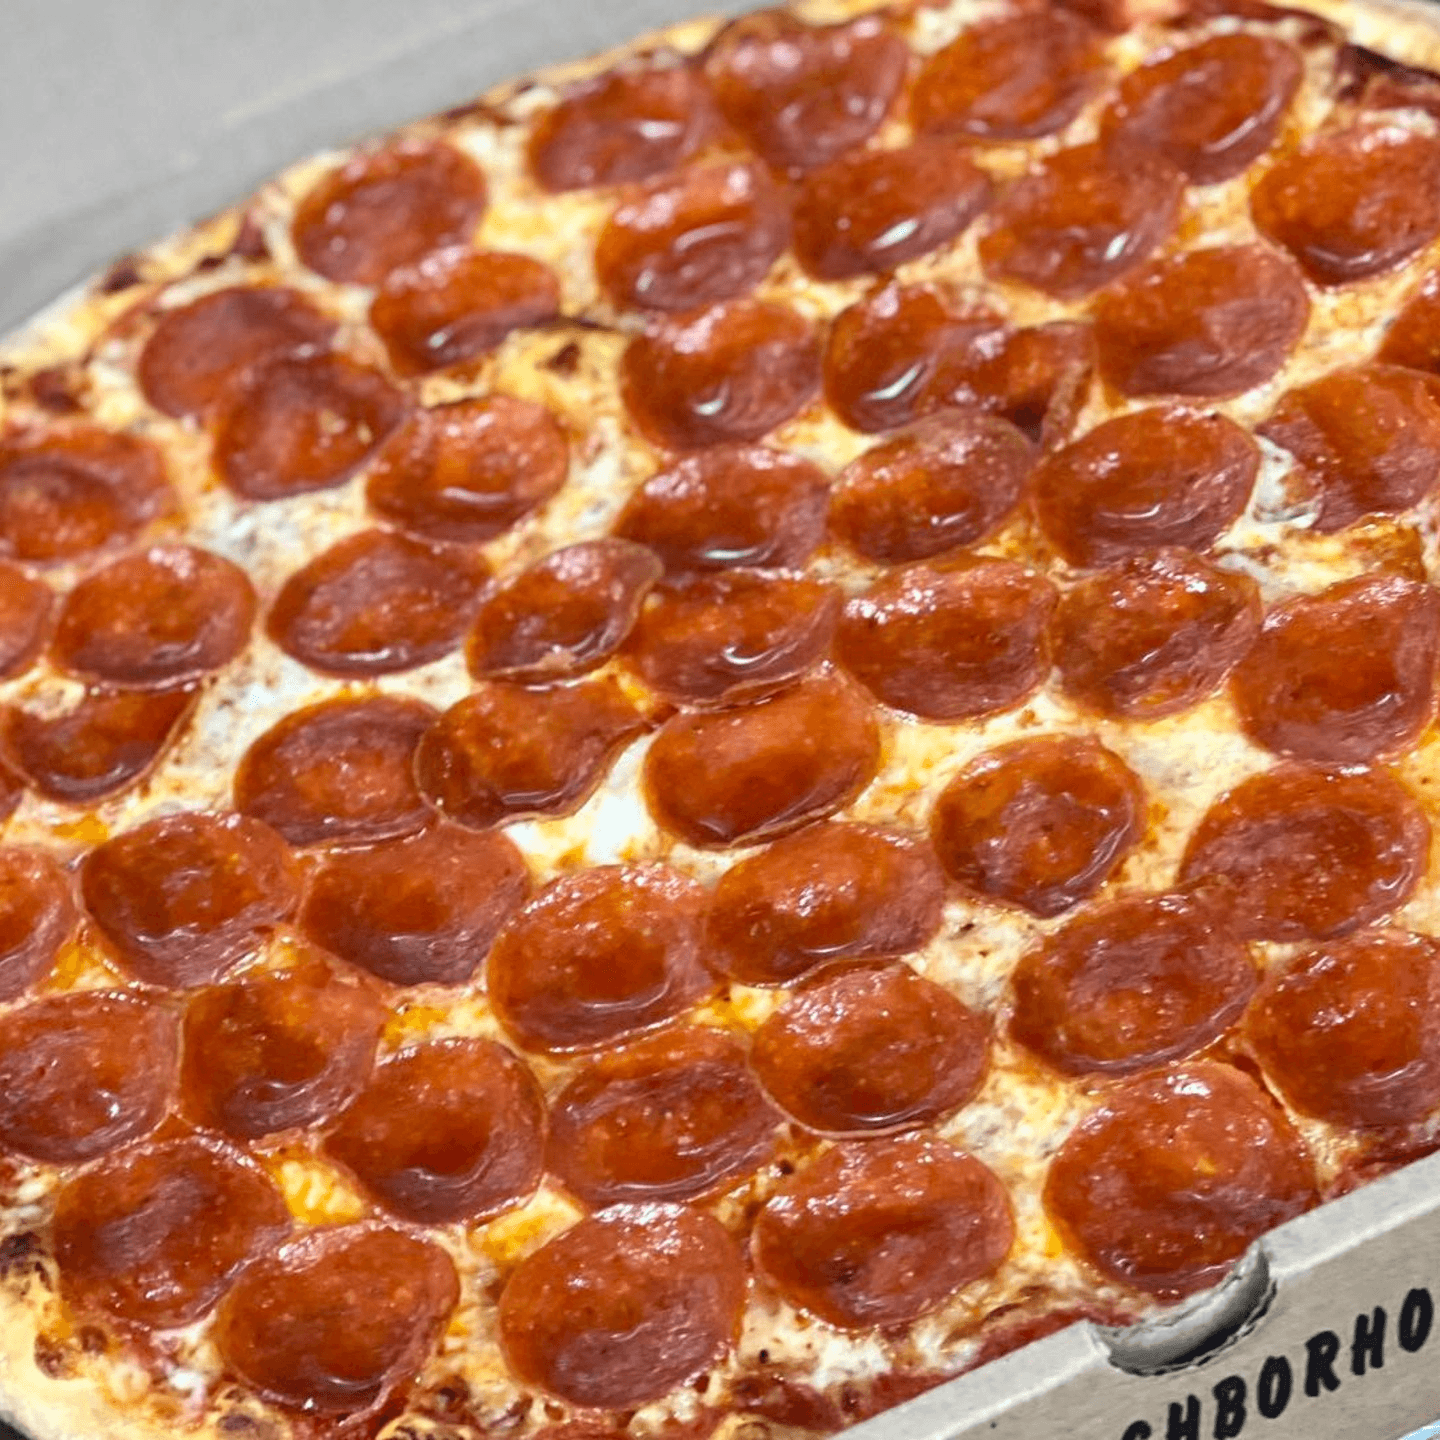 Savor a Classic Pepperoni Pizza!